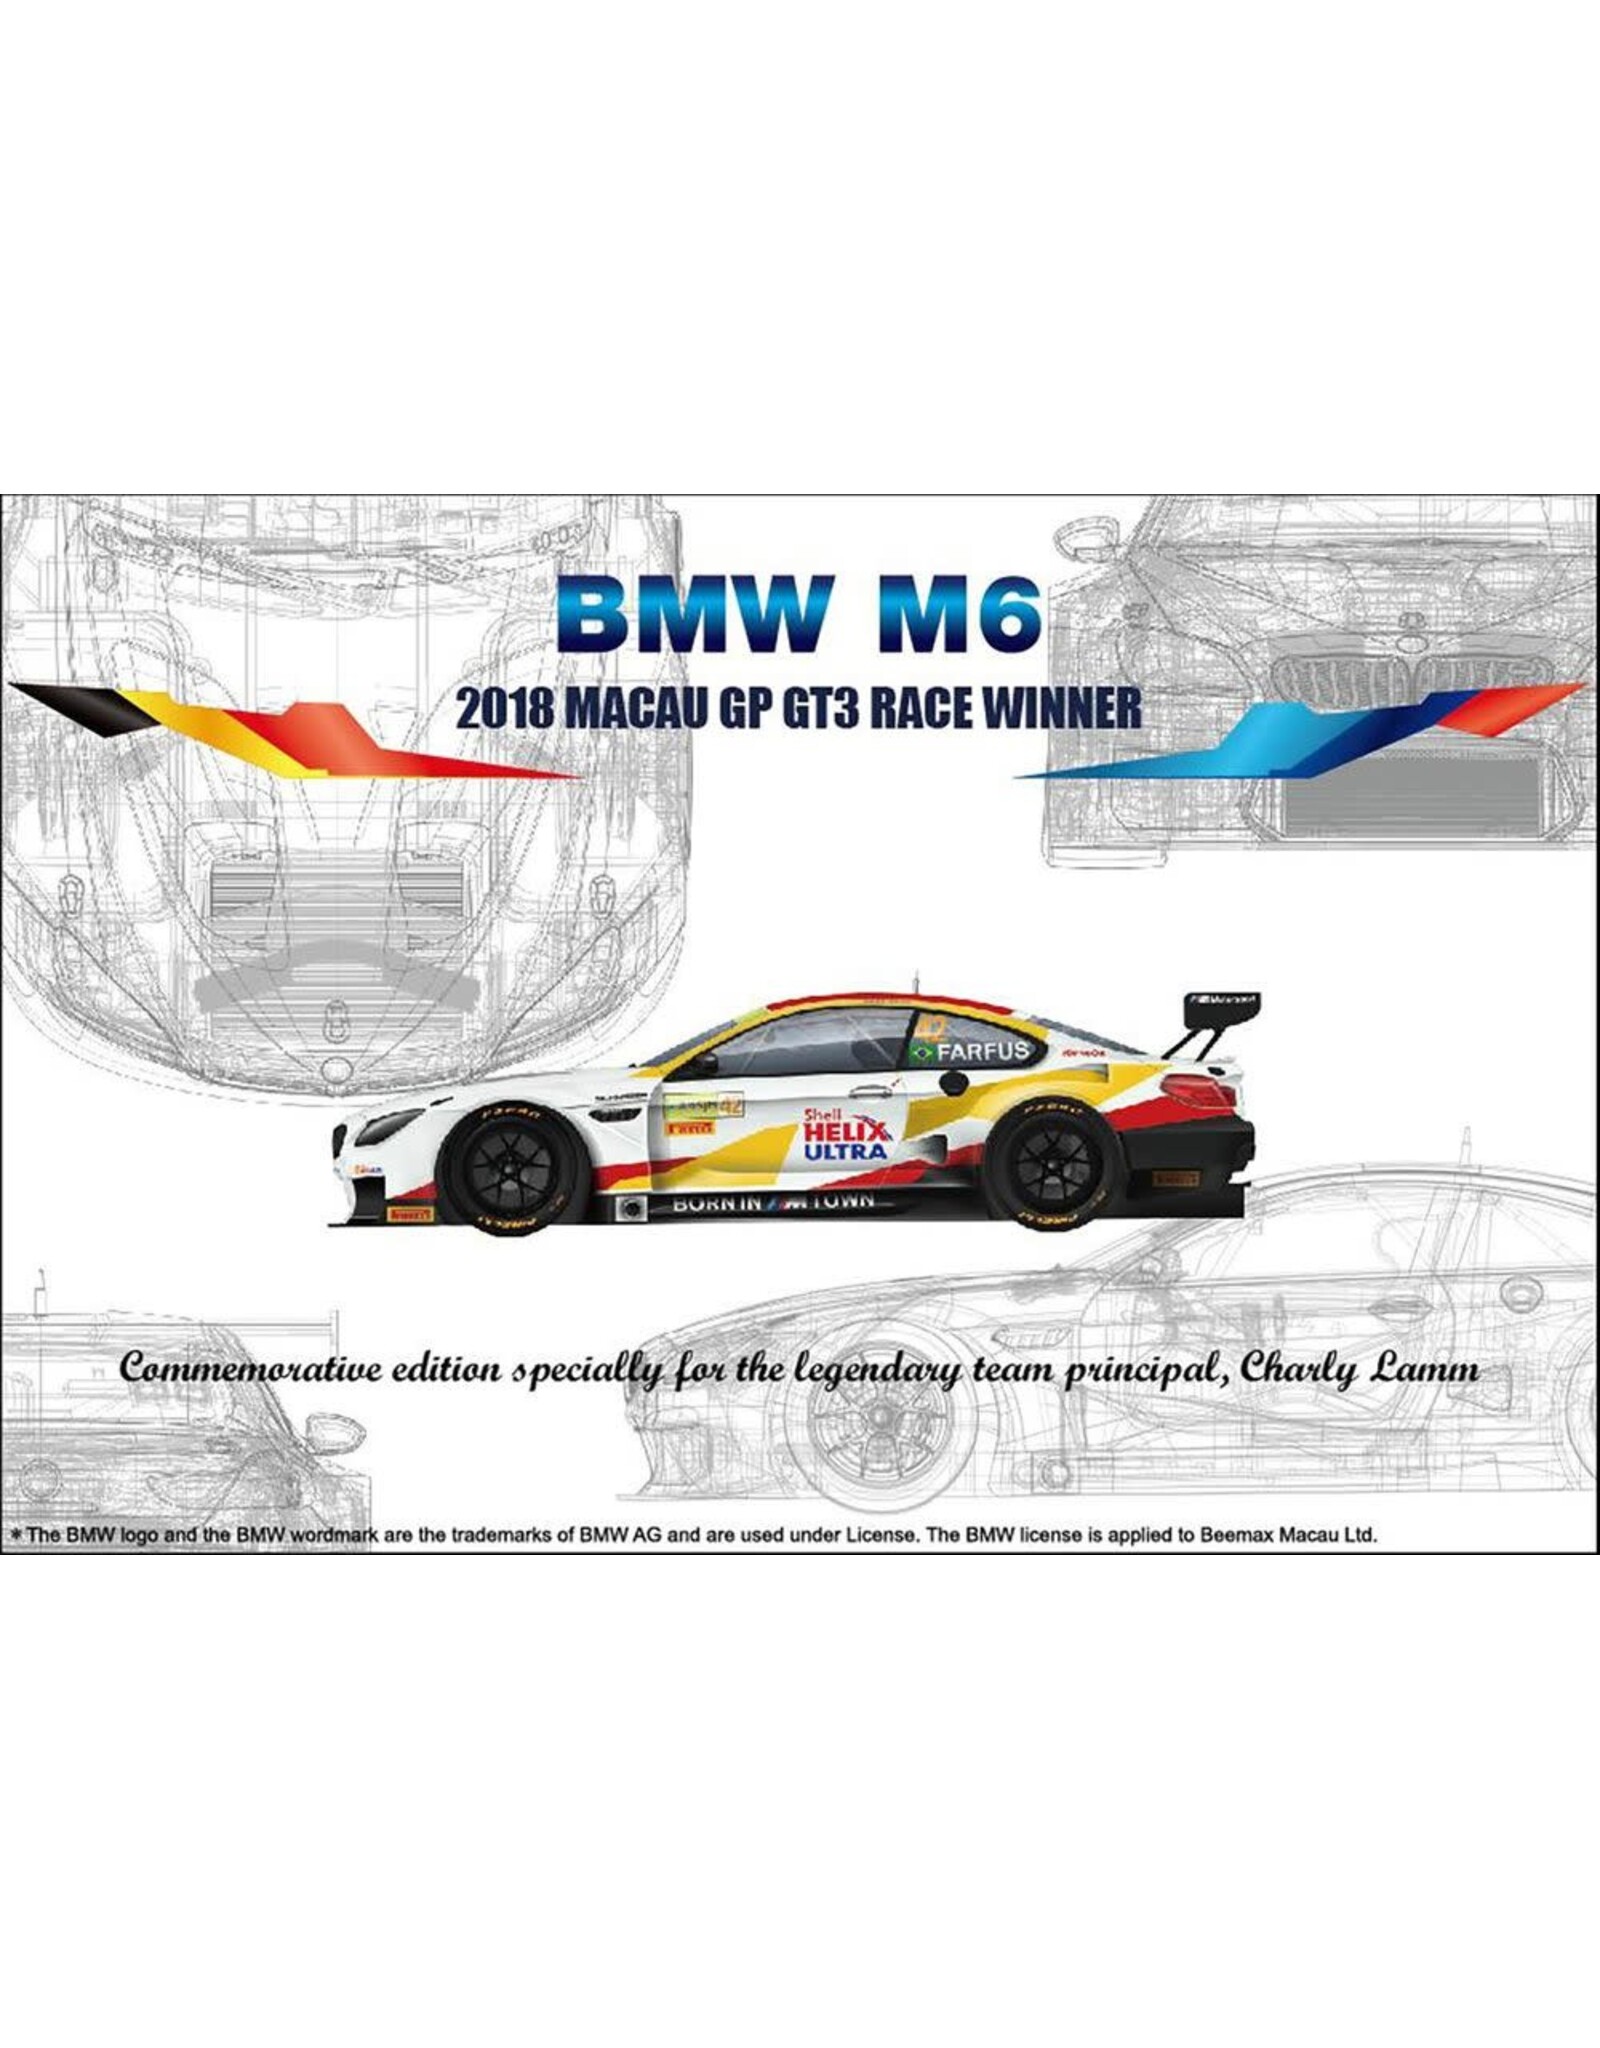 Platz 1/24 BMW M6 2018 MACAU GP GT3 RACE WINNER, Vehicle